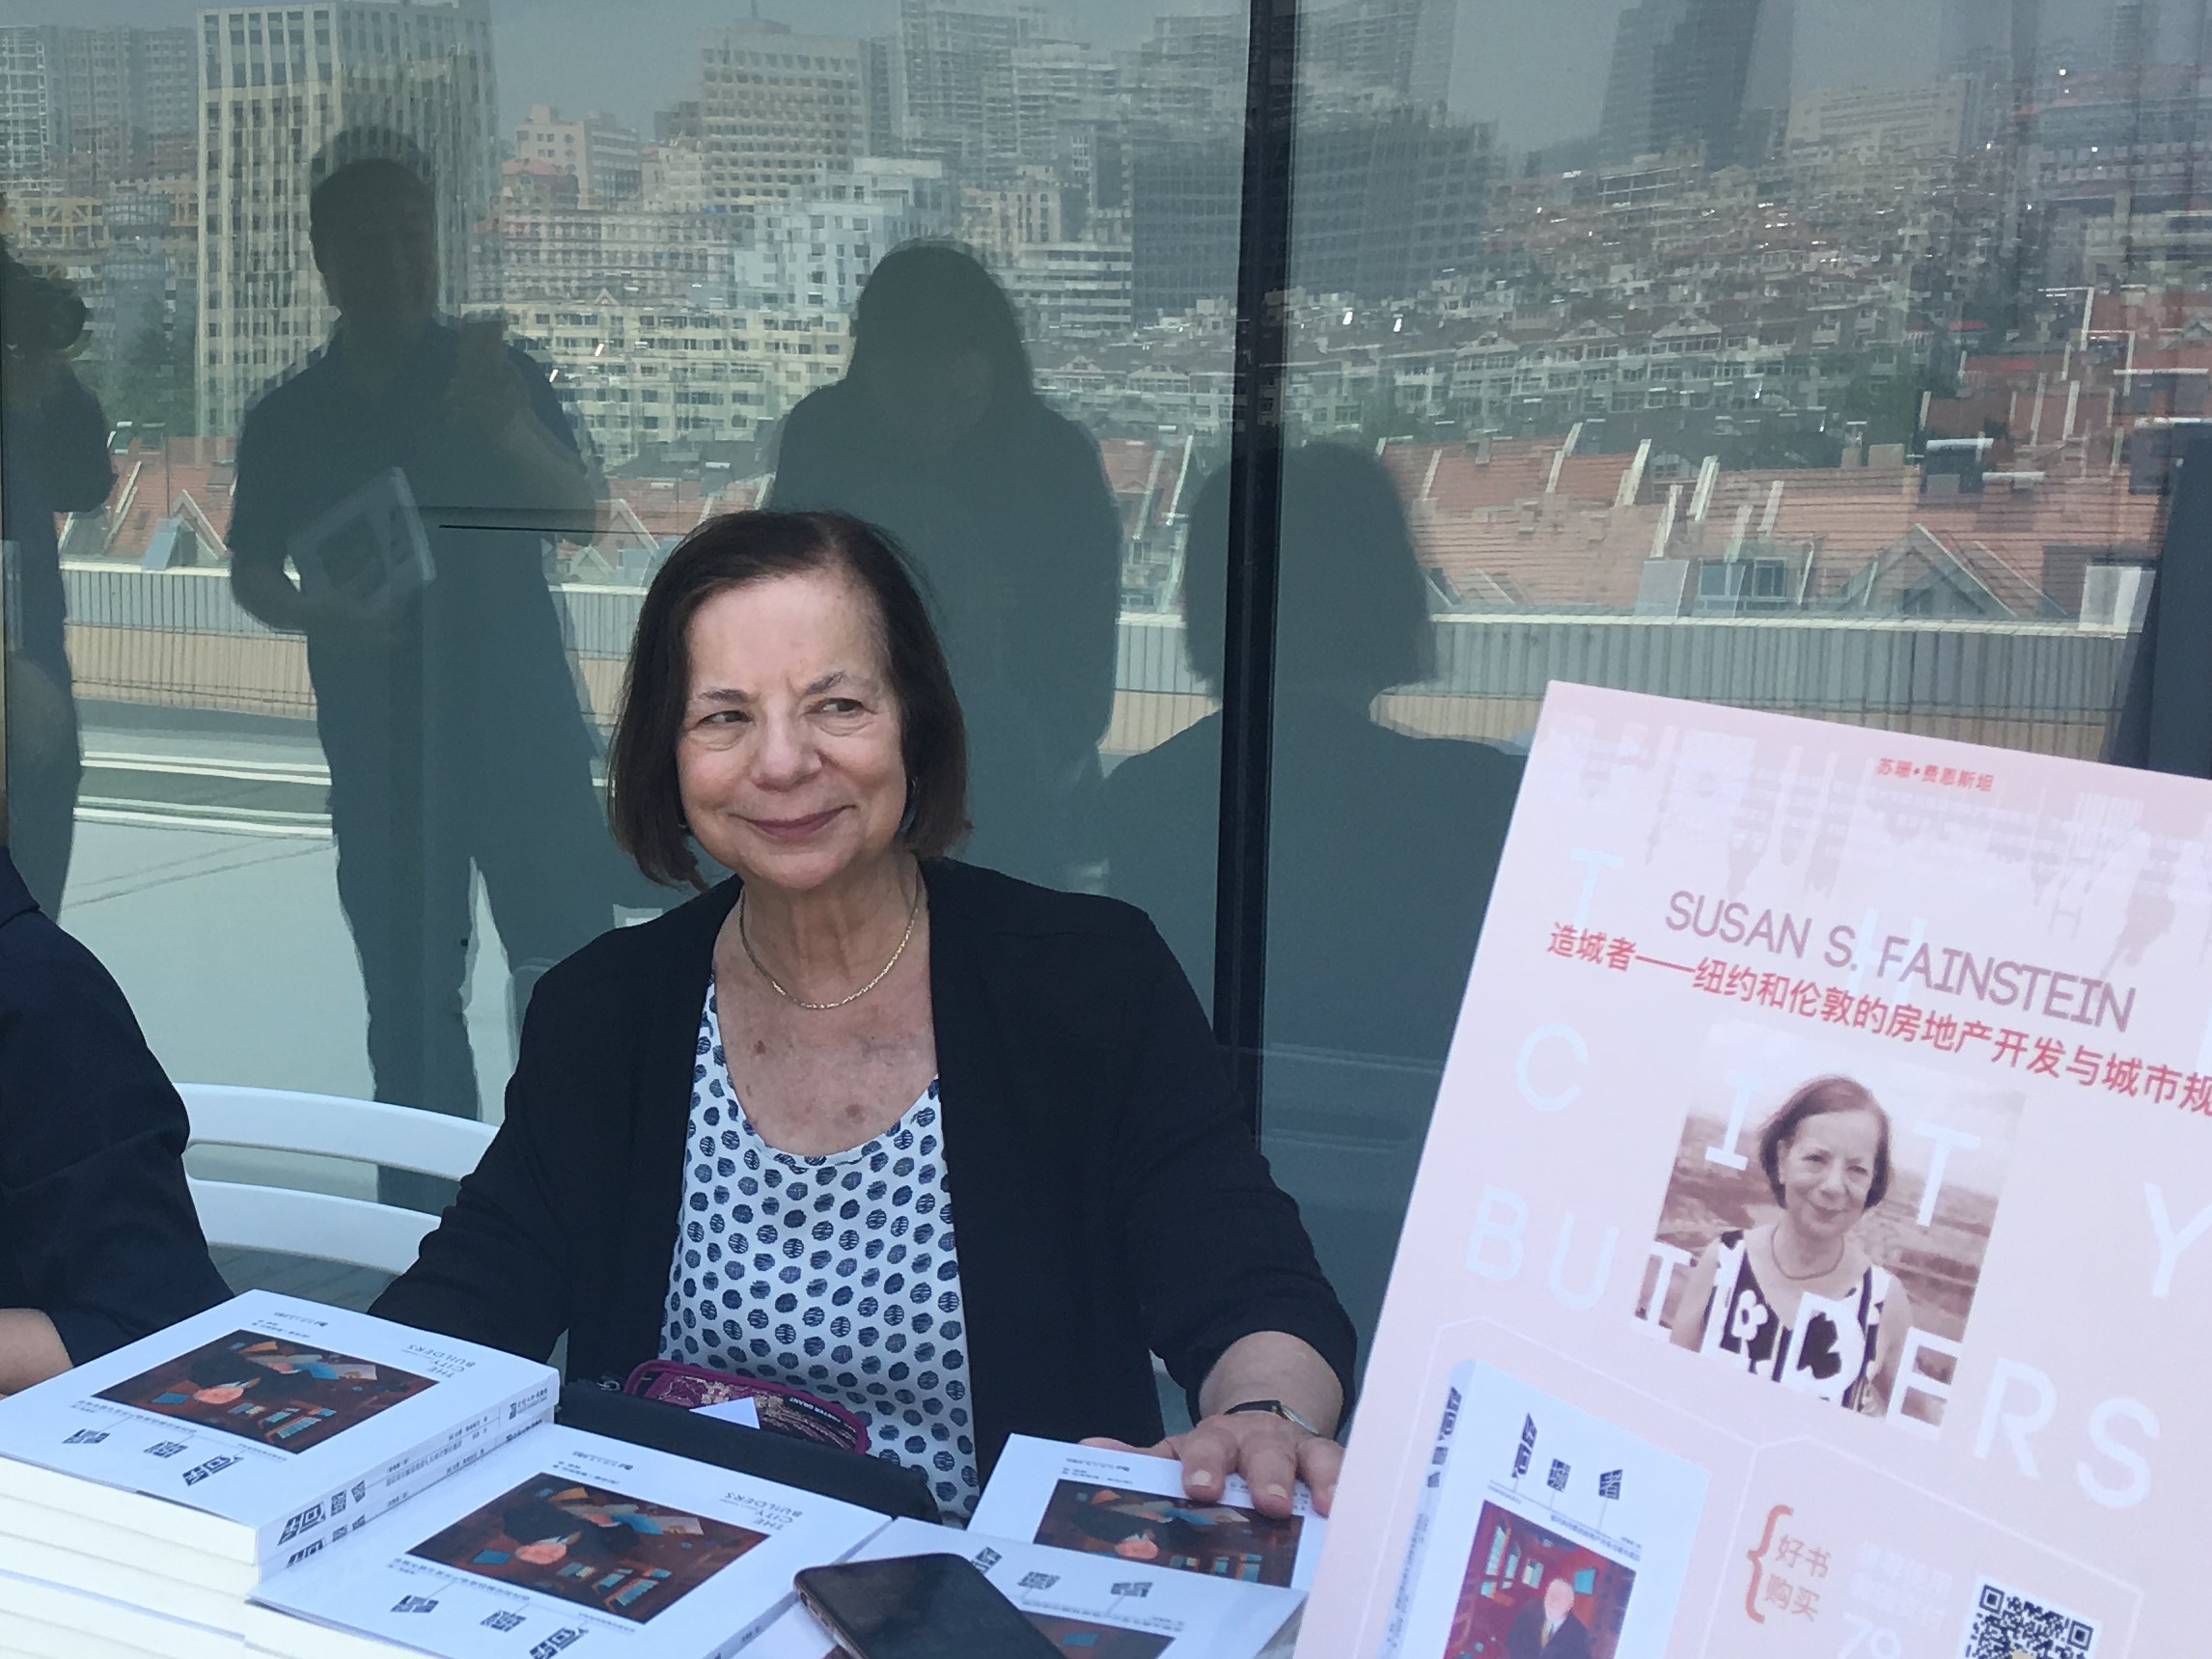 Susan Fainstein book signing